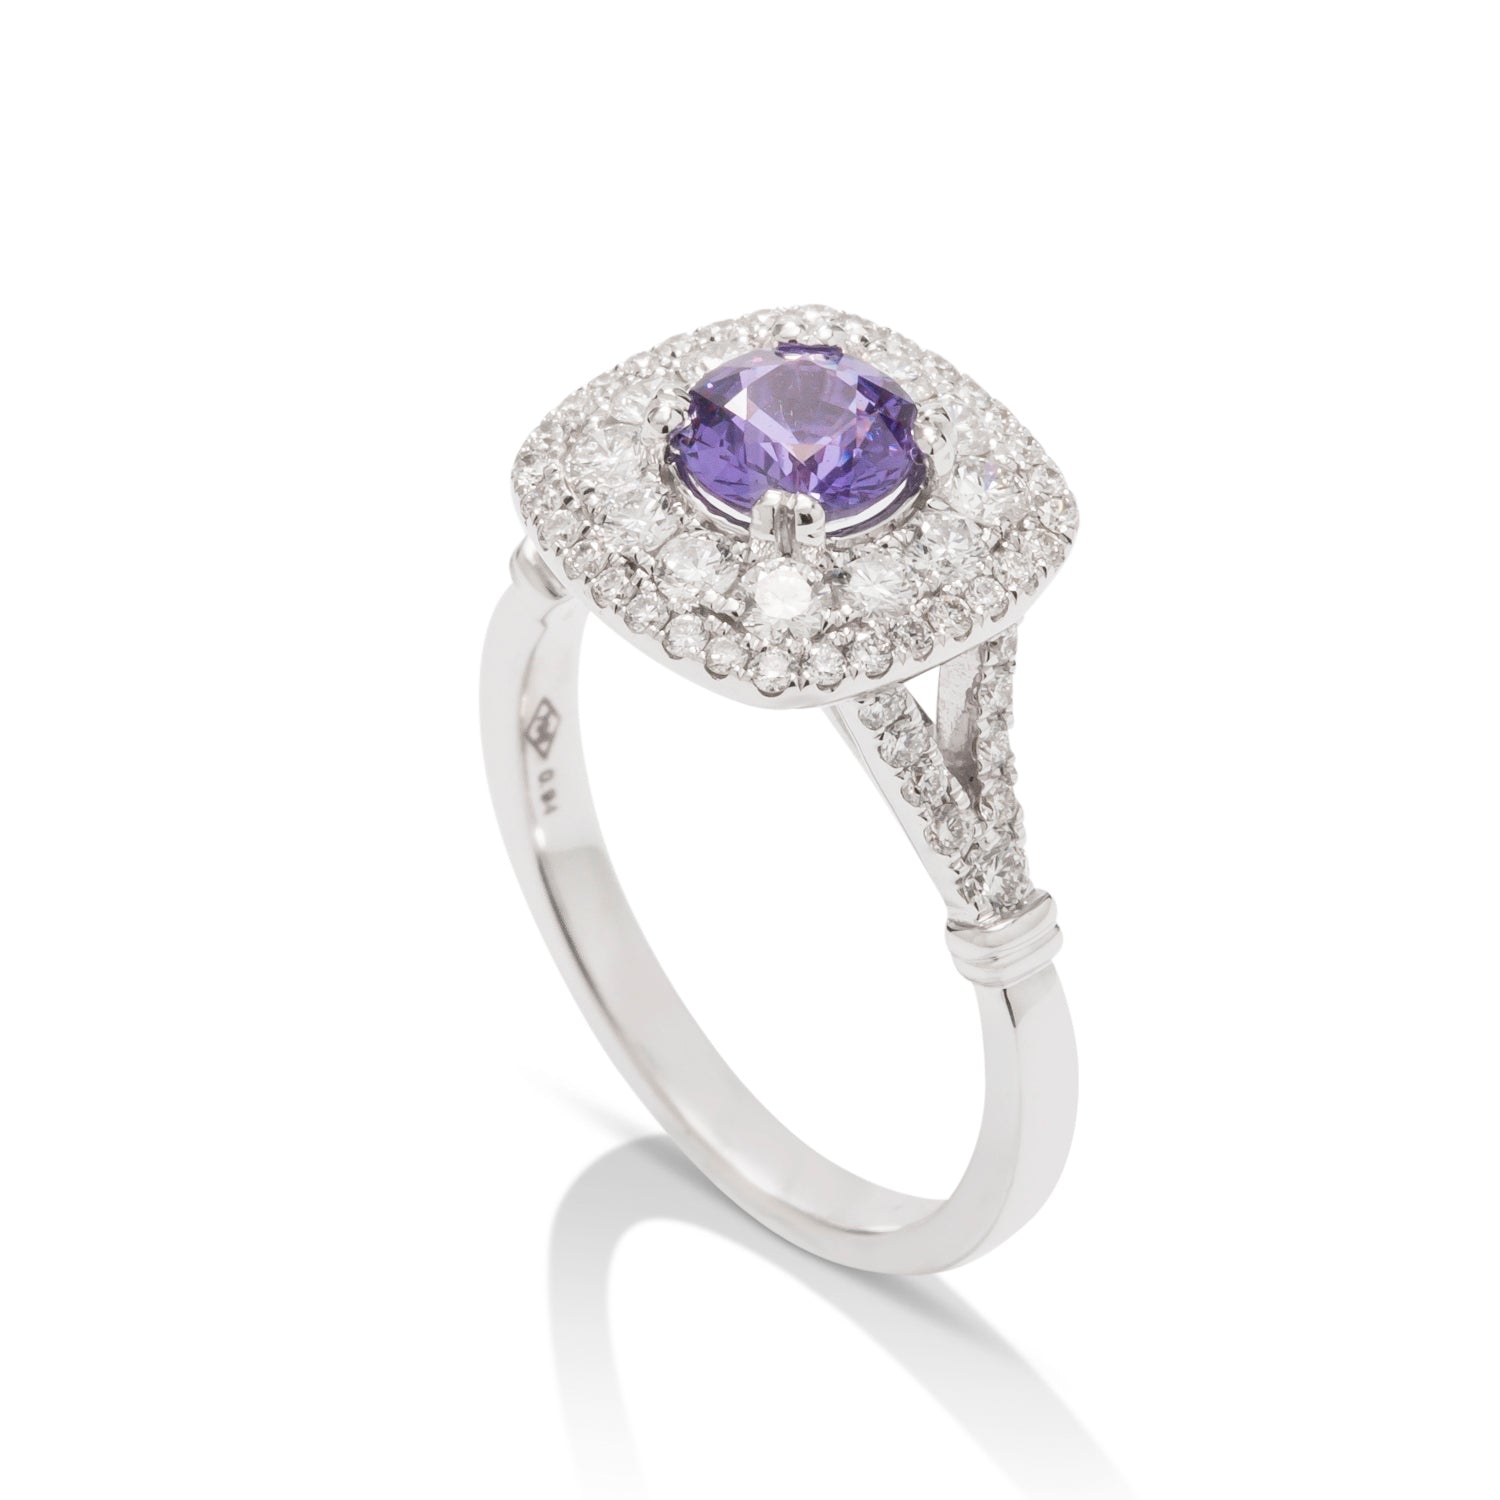 Purple Sapphire and Diamond Ring - Charles Koll Jewellers